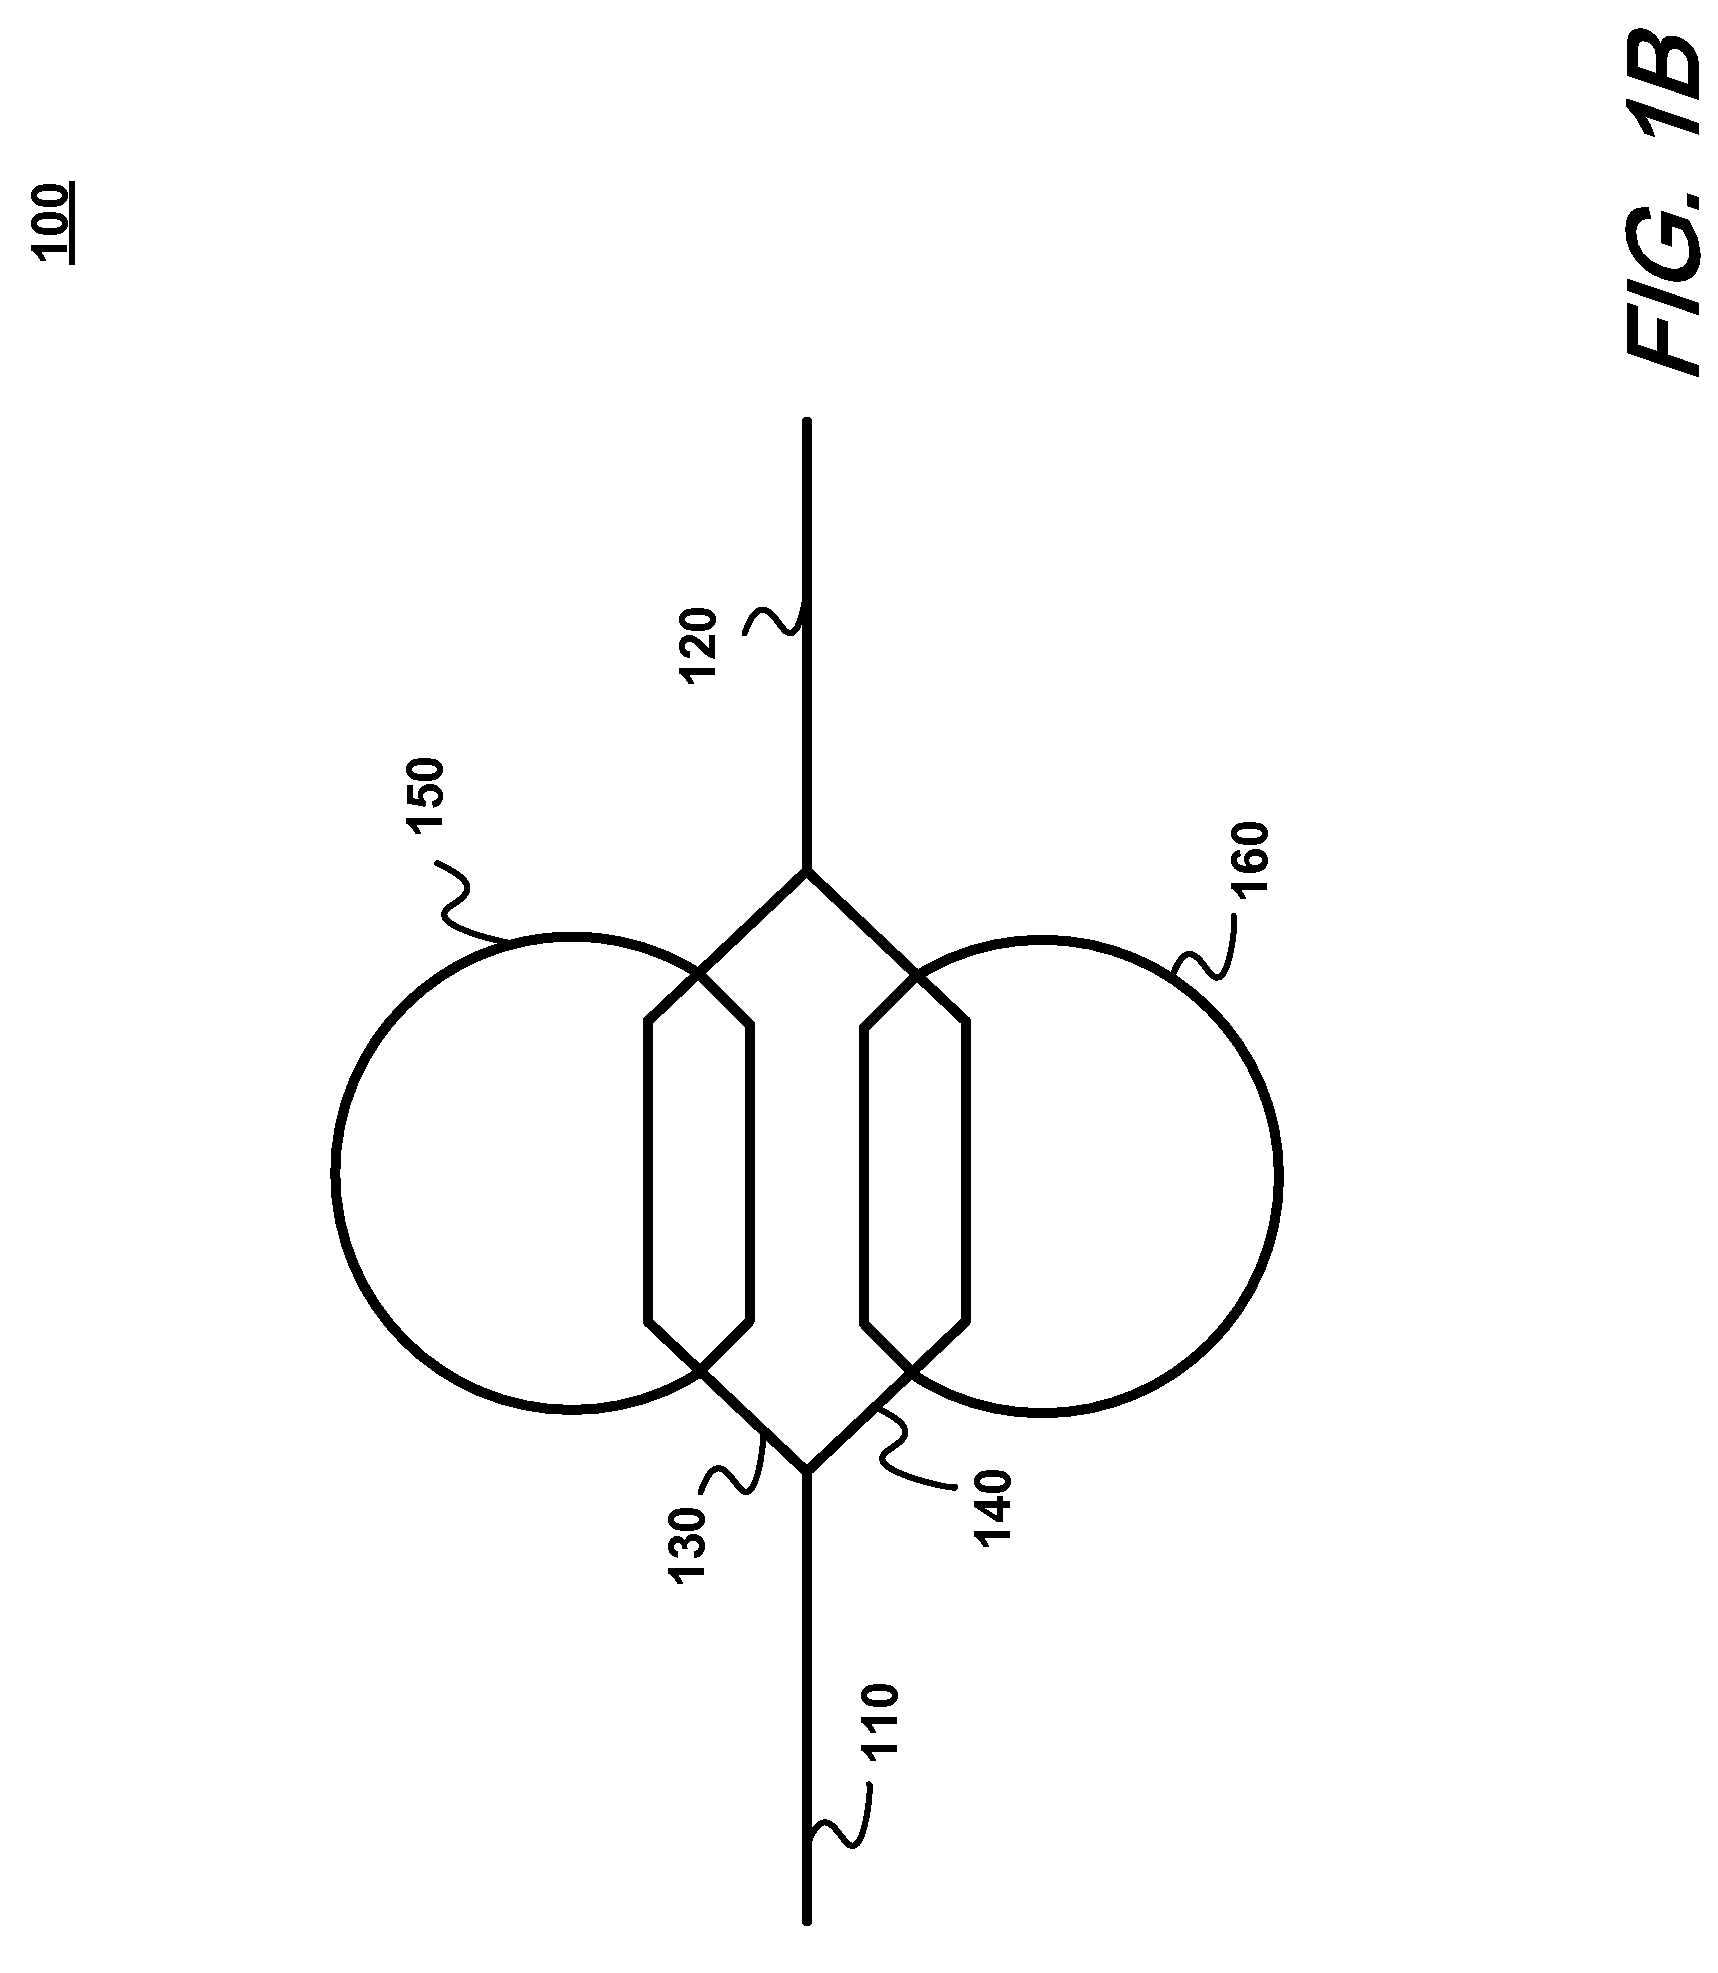 Semiconductor optical modulator